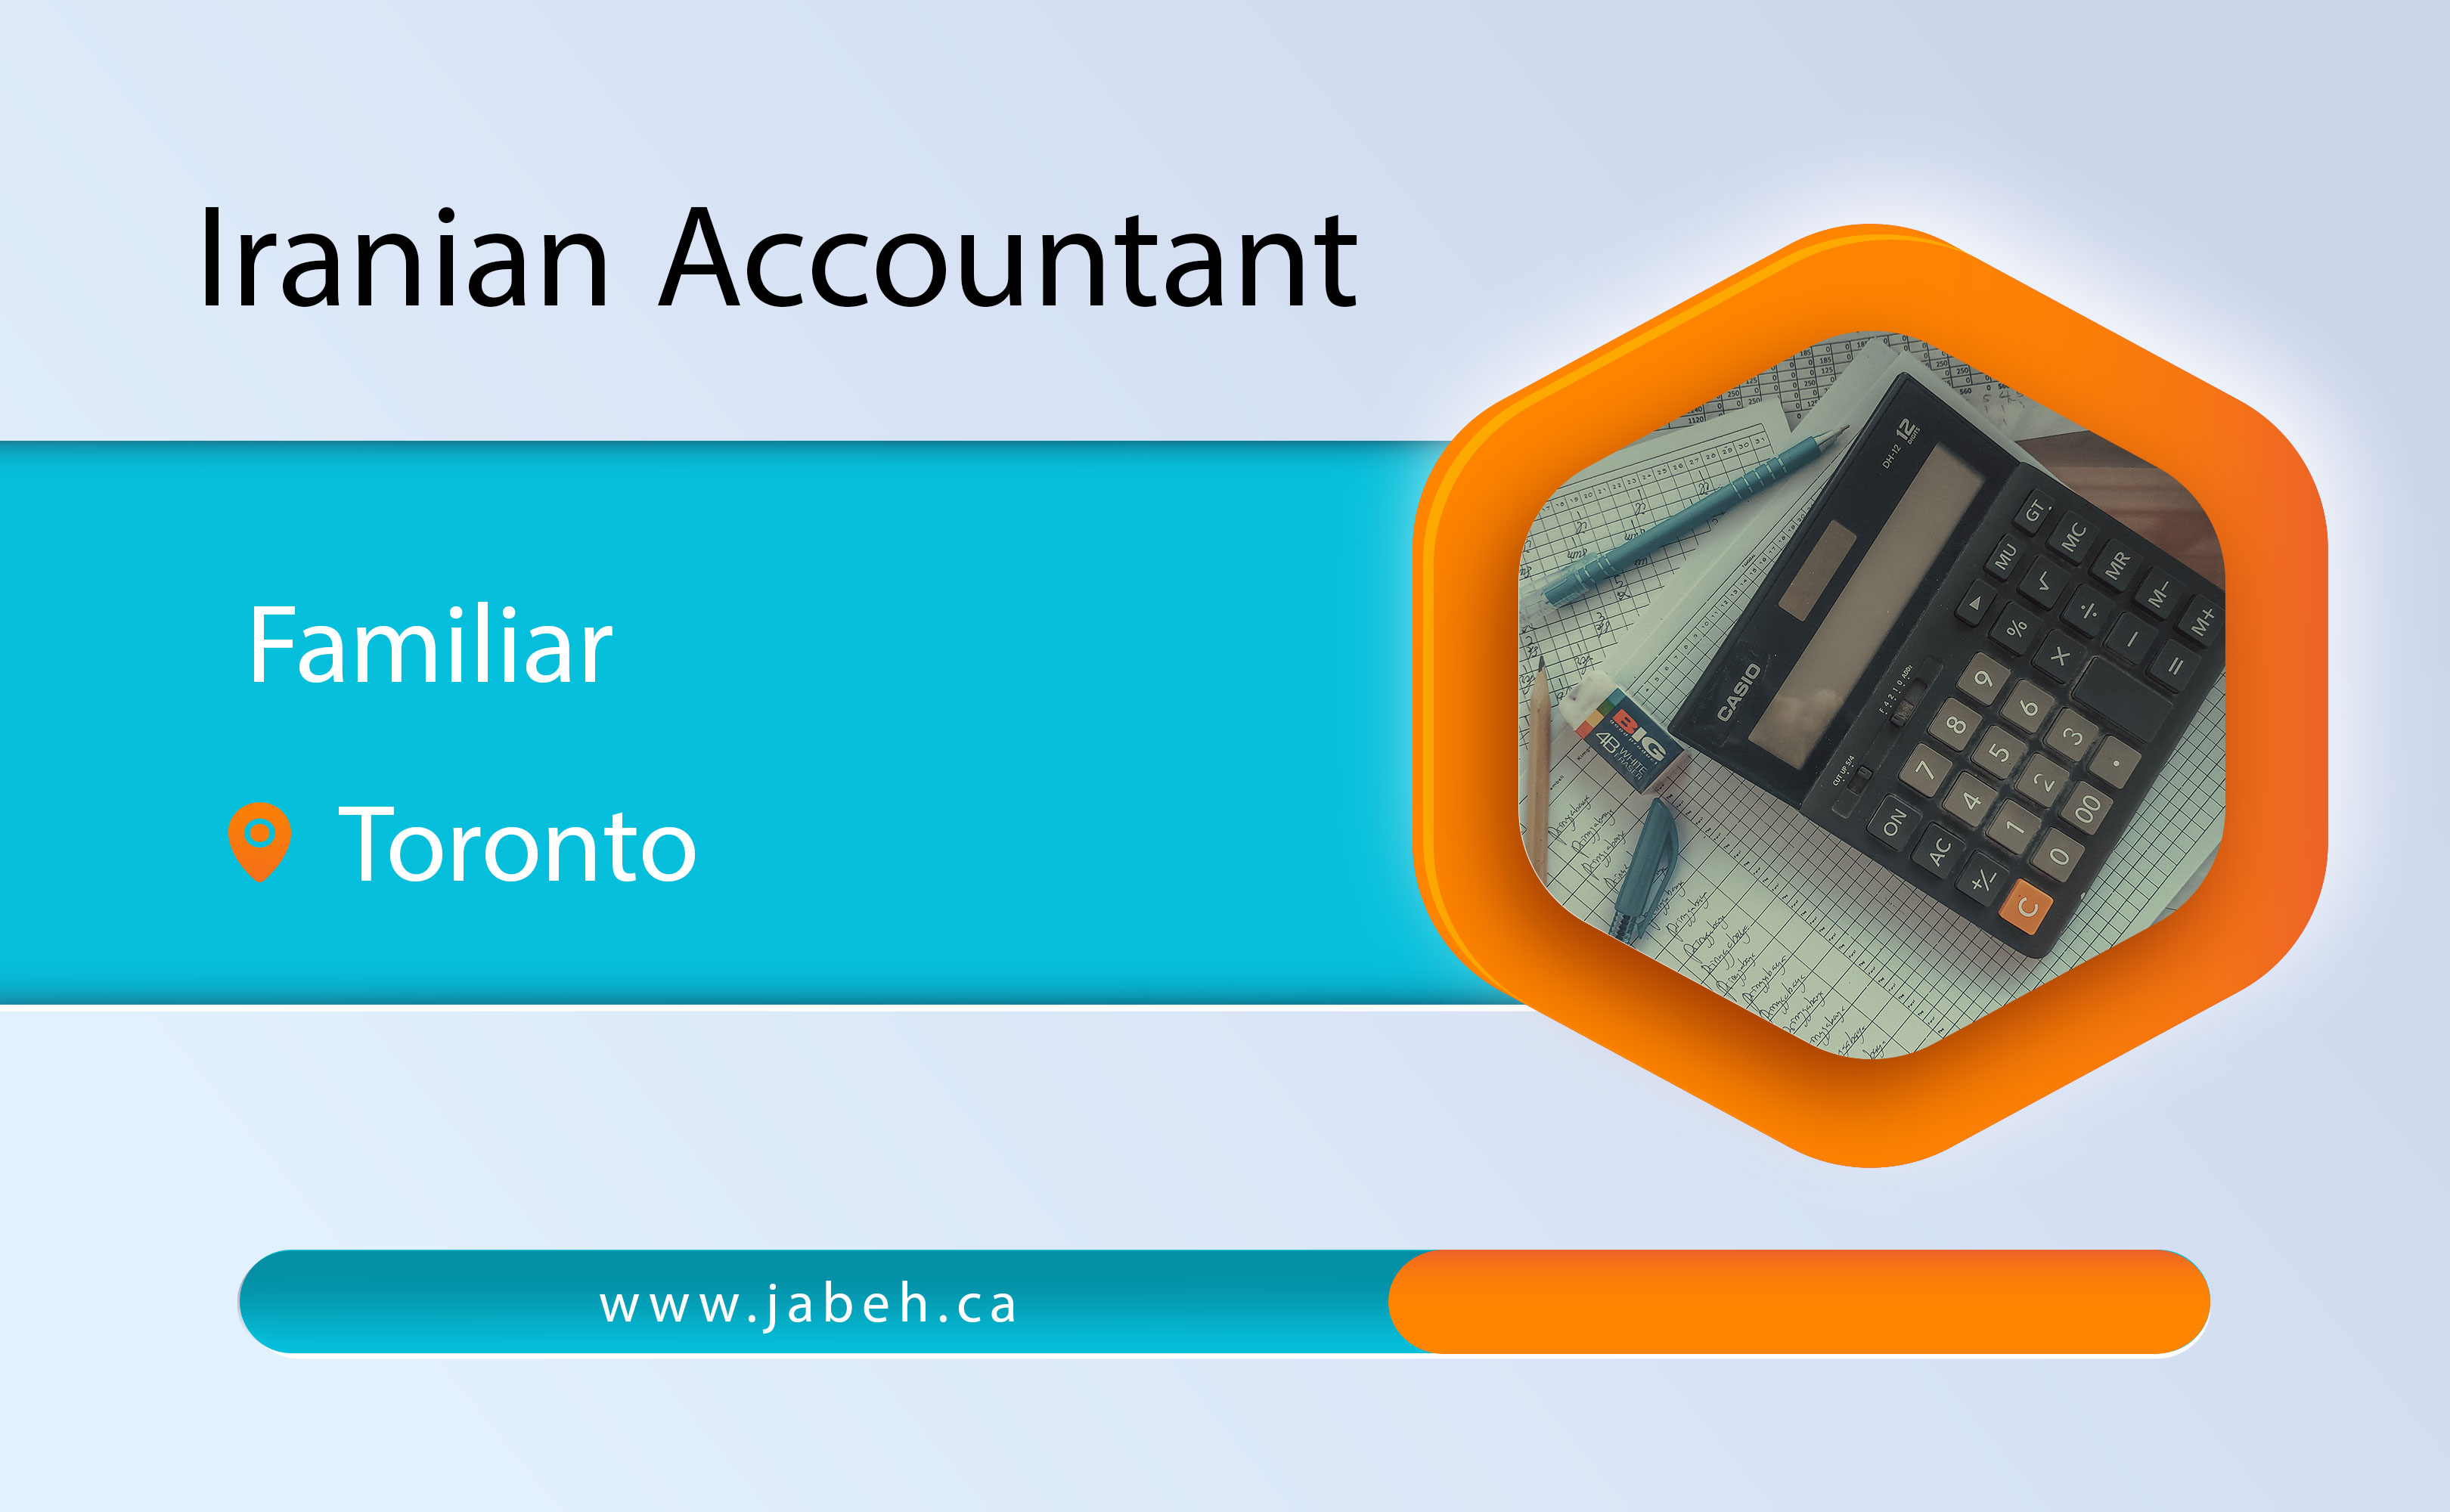 Familiar Iranian accounting in Toronto